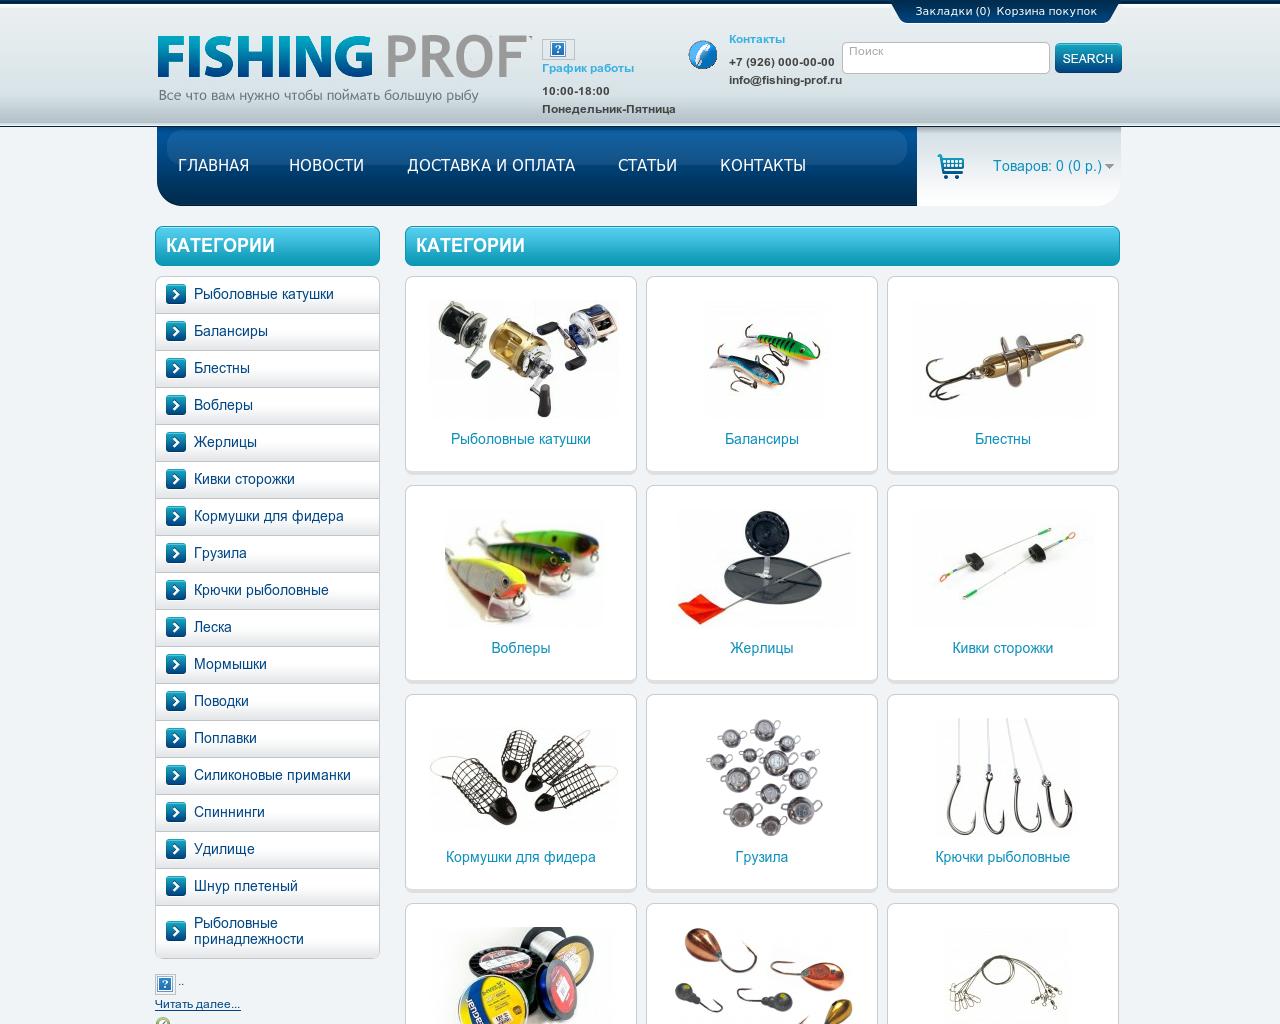 Изображение сайта fishing-prof.ru в разрешении 1280x1024